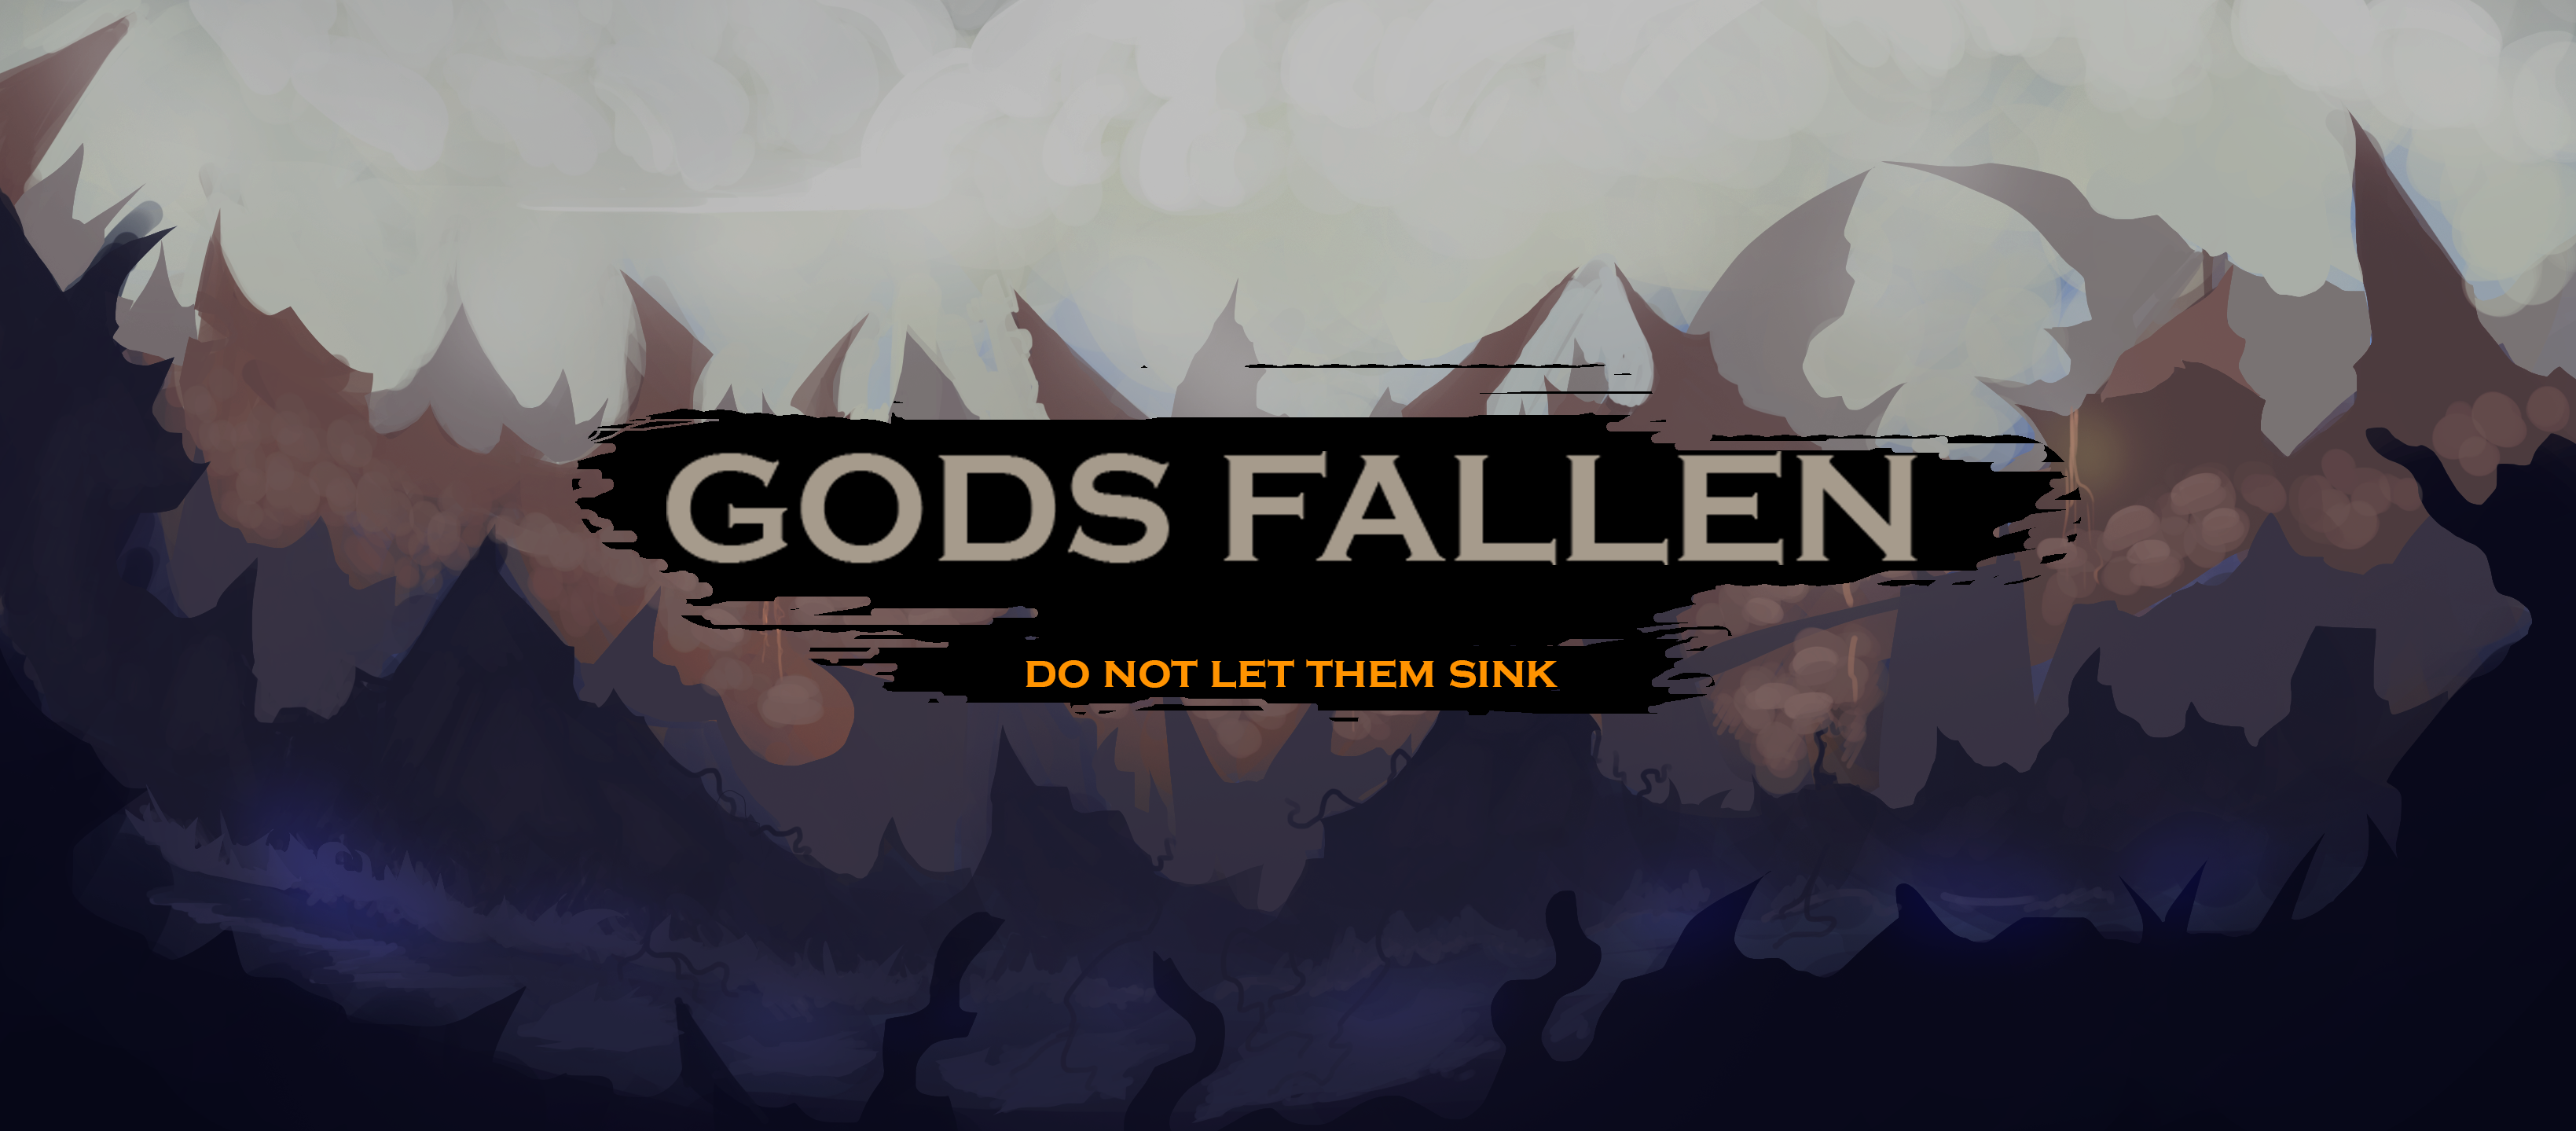 Gods fallen